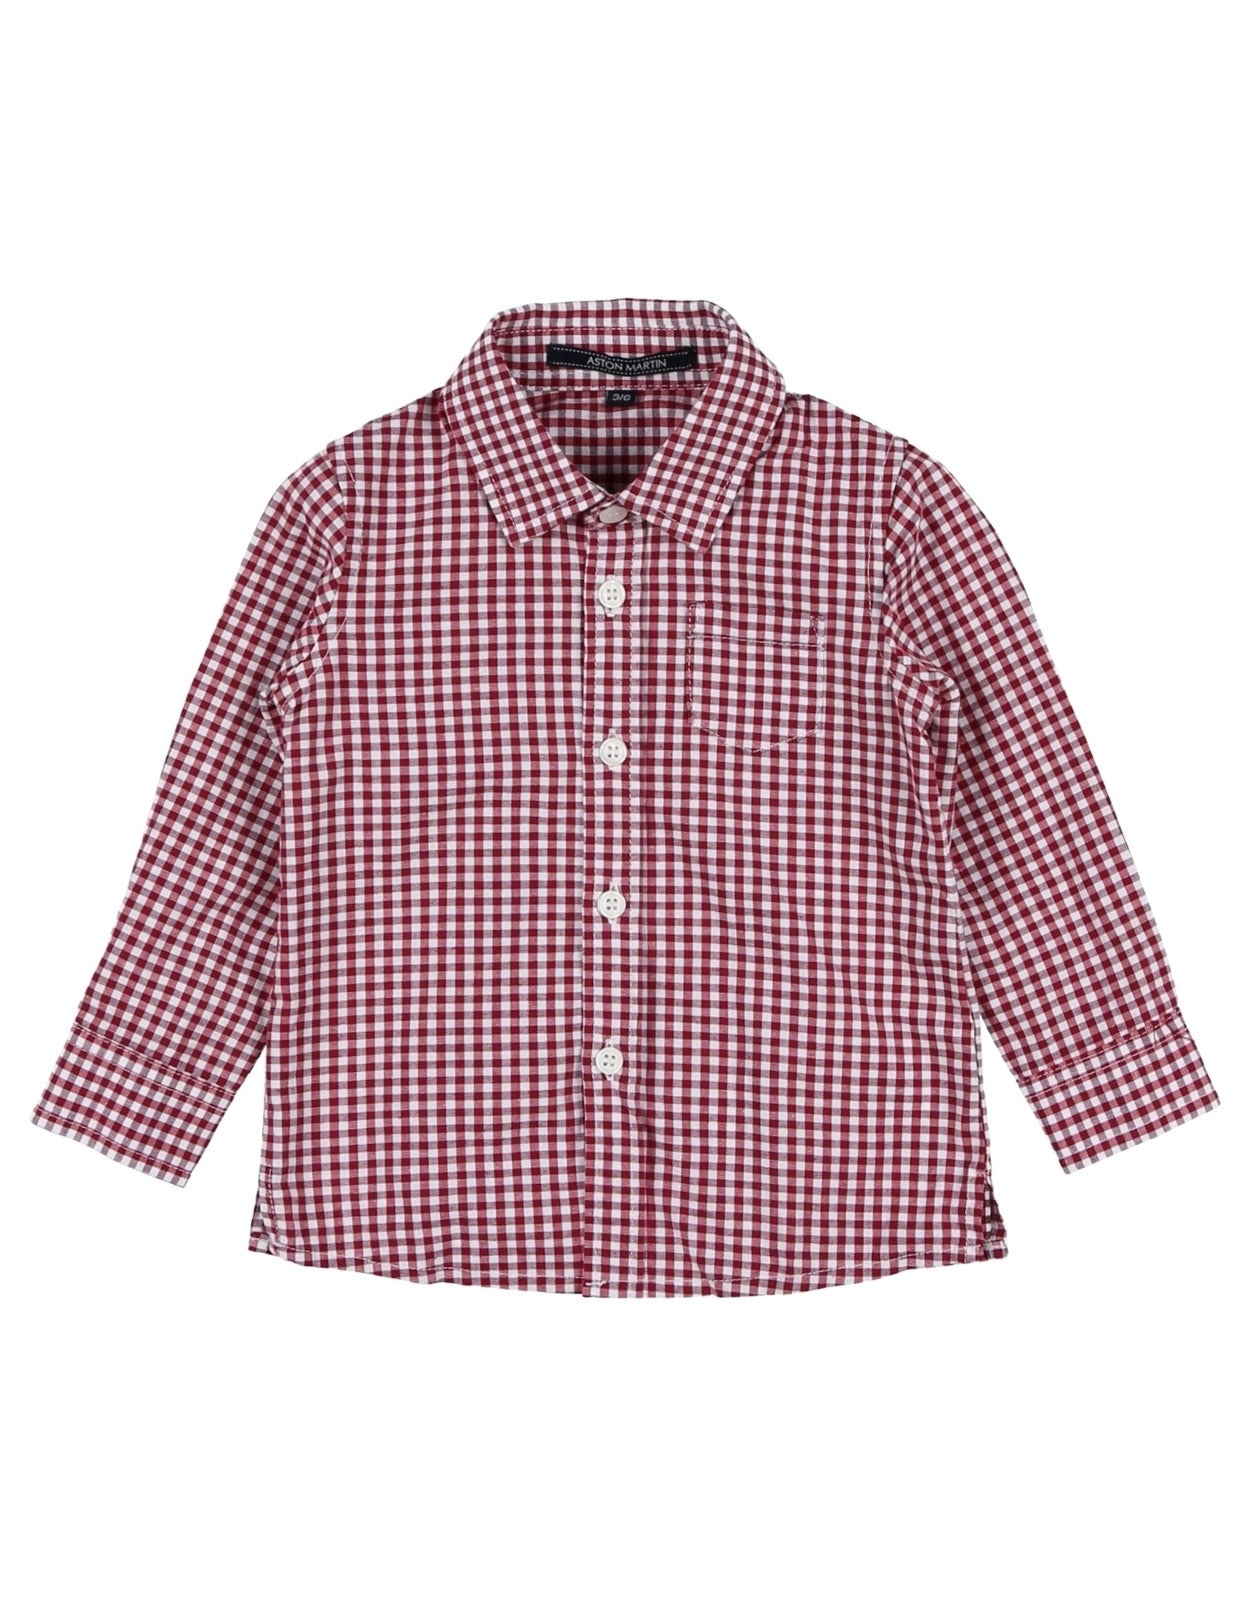 ASTON MARTIN Shirt Size 3-6M Gingham Pattern Long Sleeve Regular Collar gallery main photo